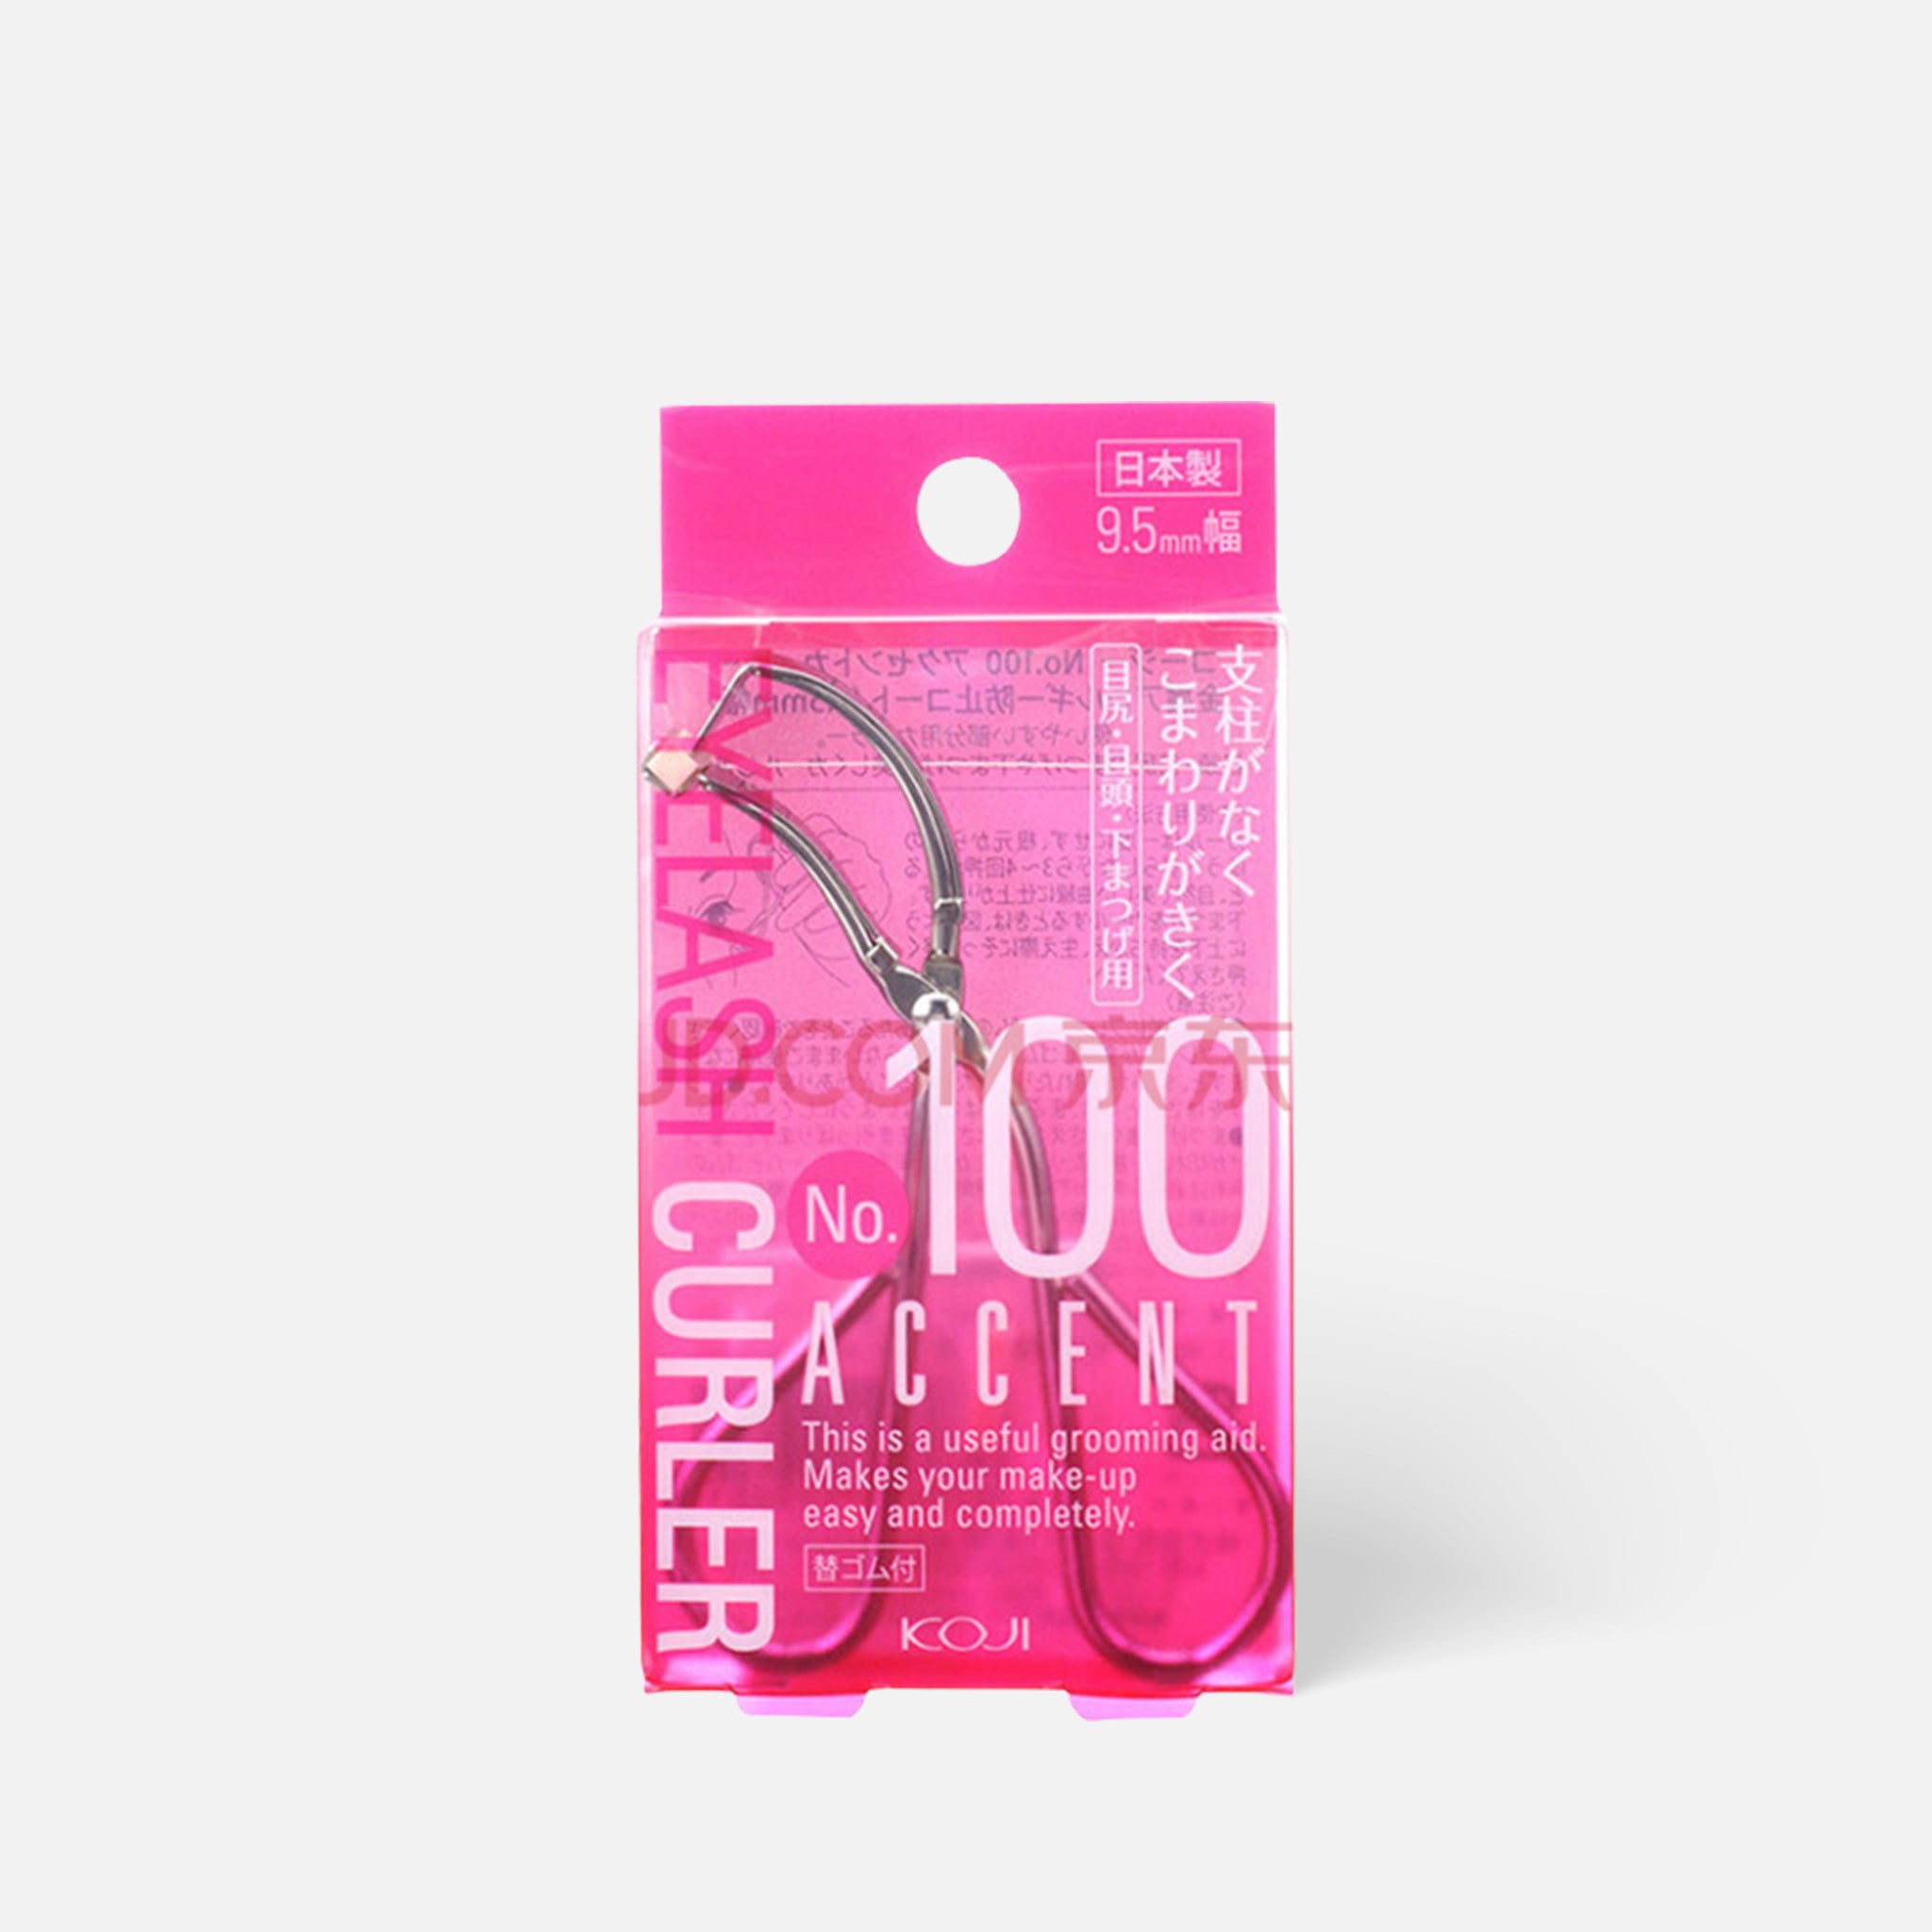 Koji-No.100 Eyelash Curler Accent-1 pc